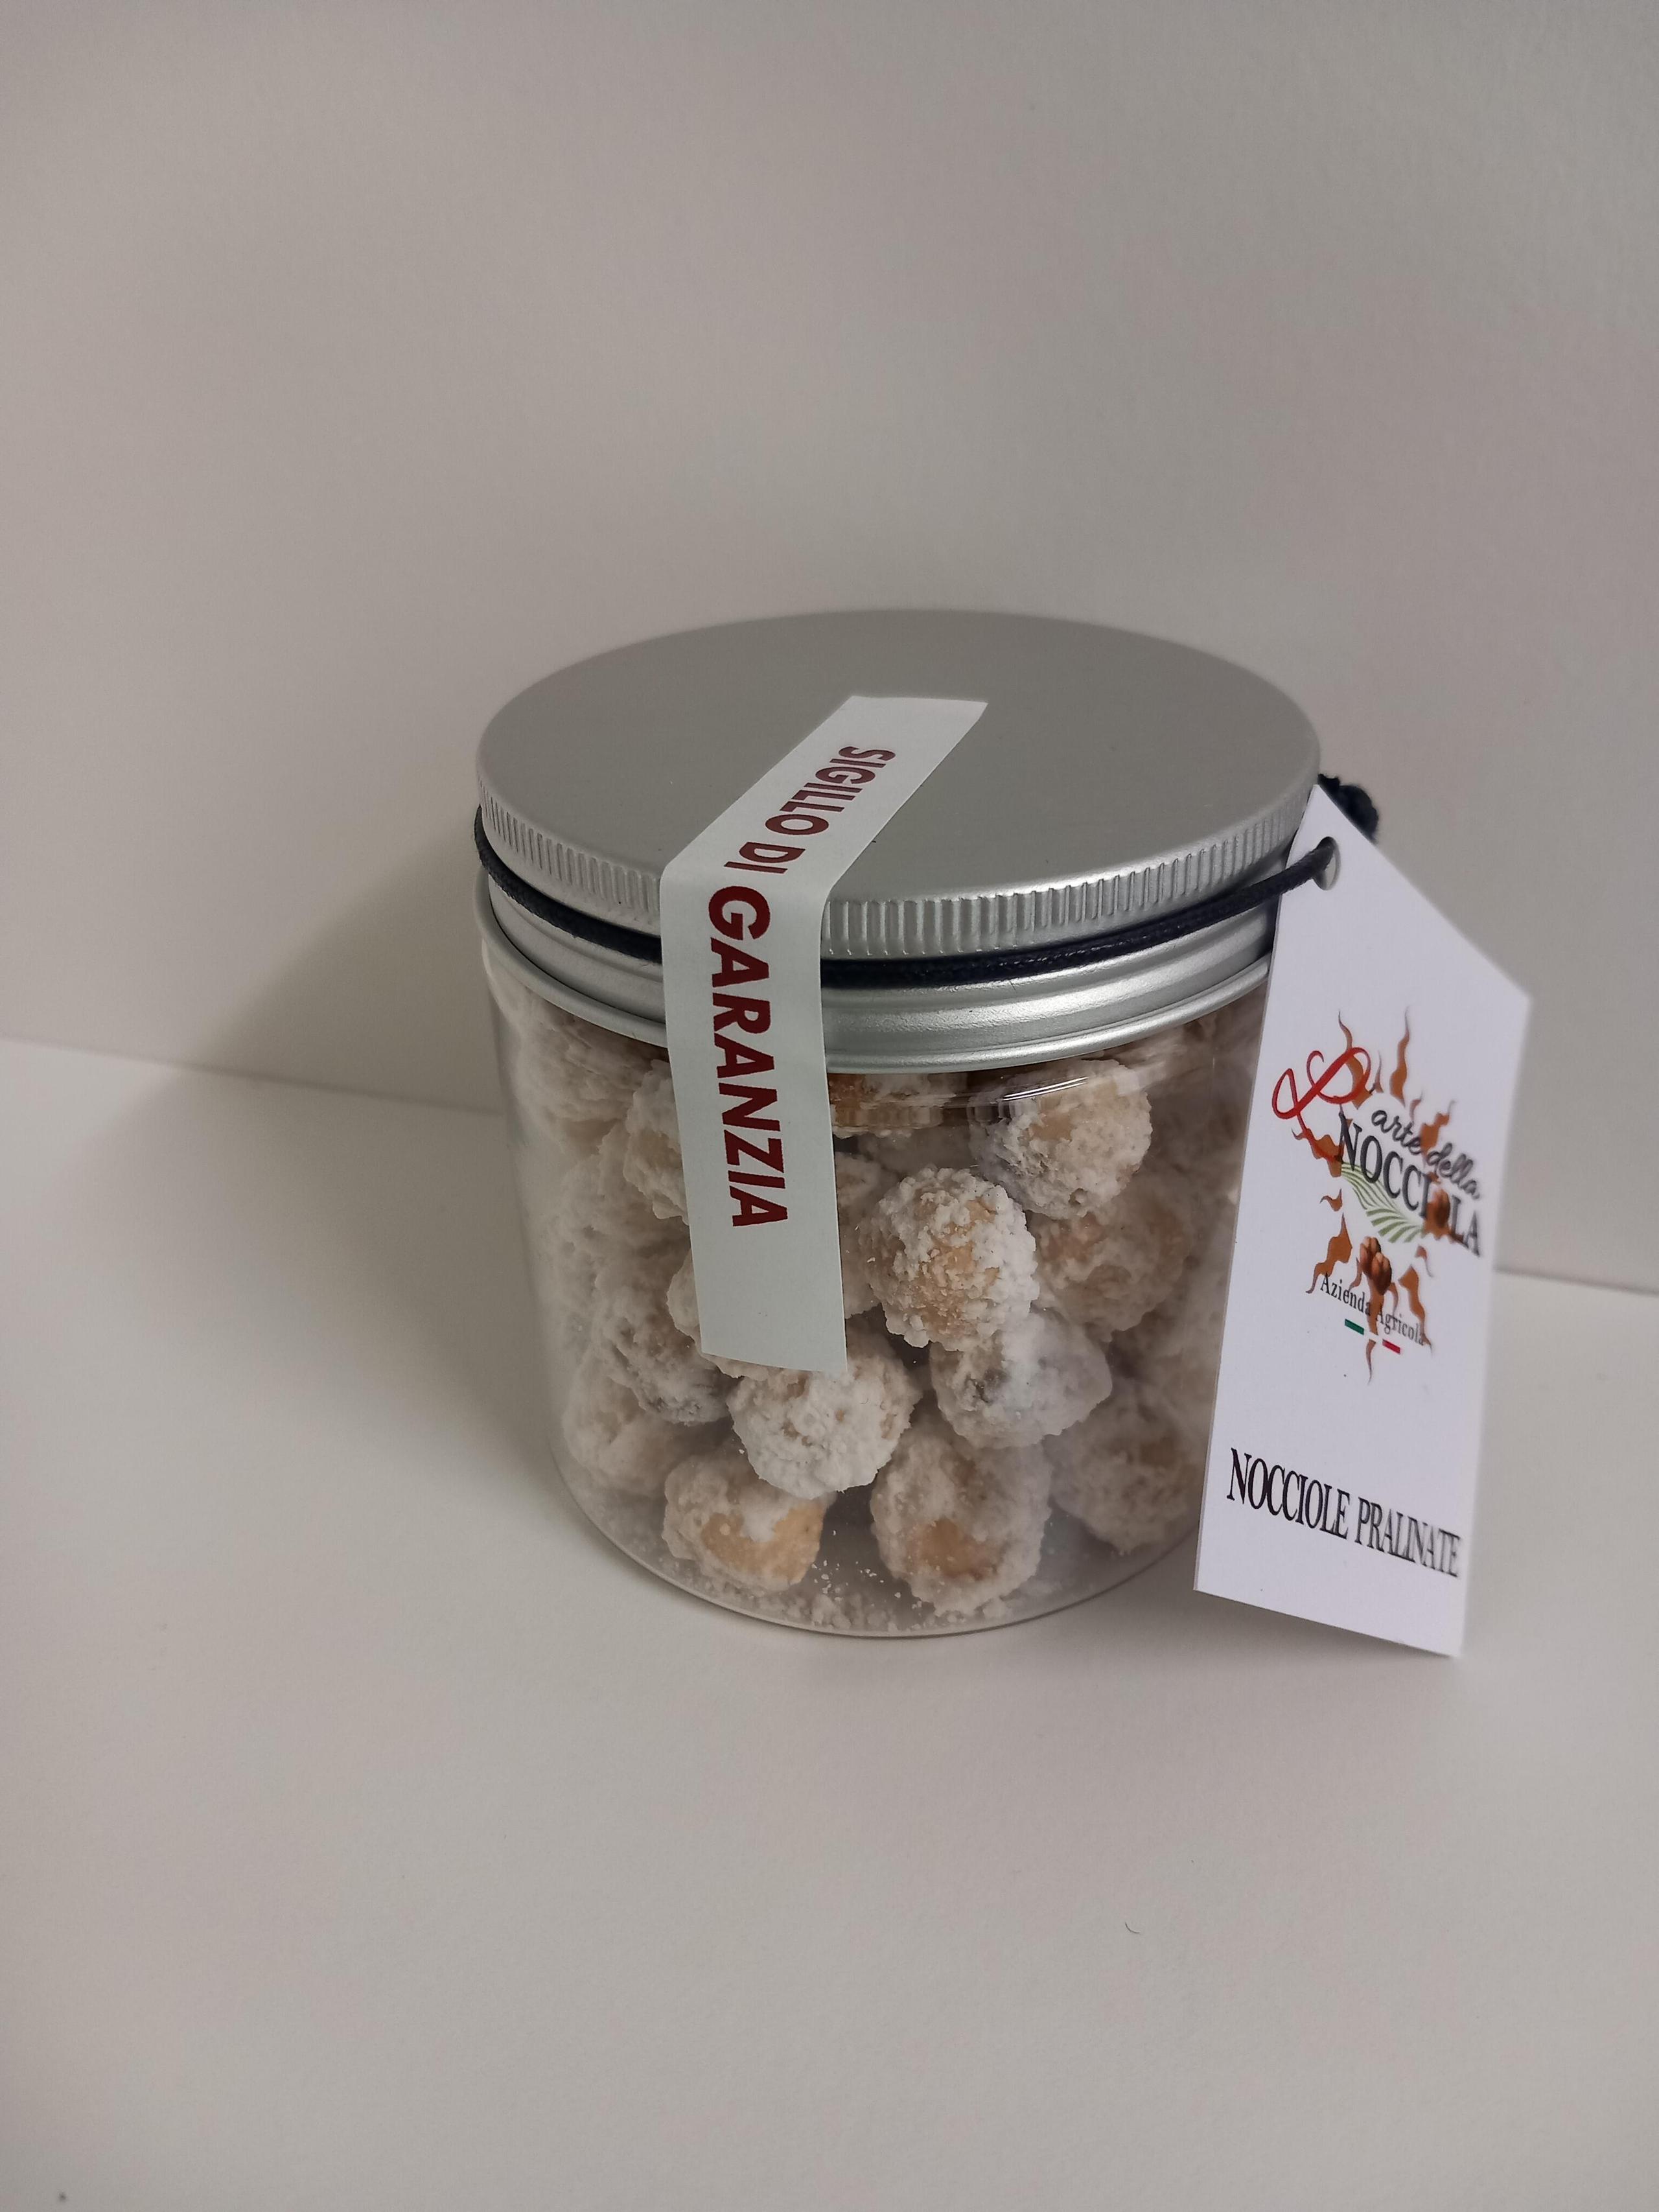 Nocciole Pralinate Bianche Zuccherate /Praline sugared hazelnuts